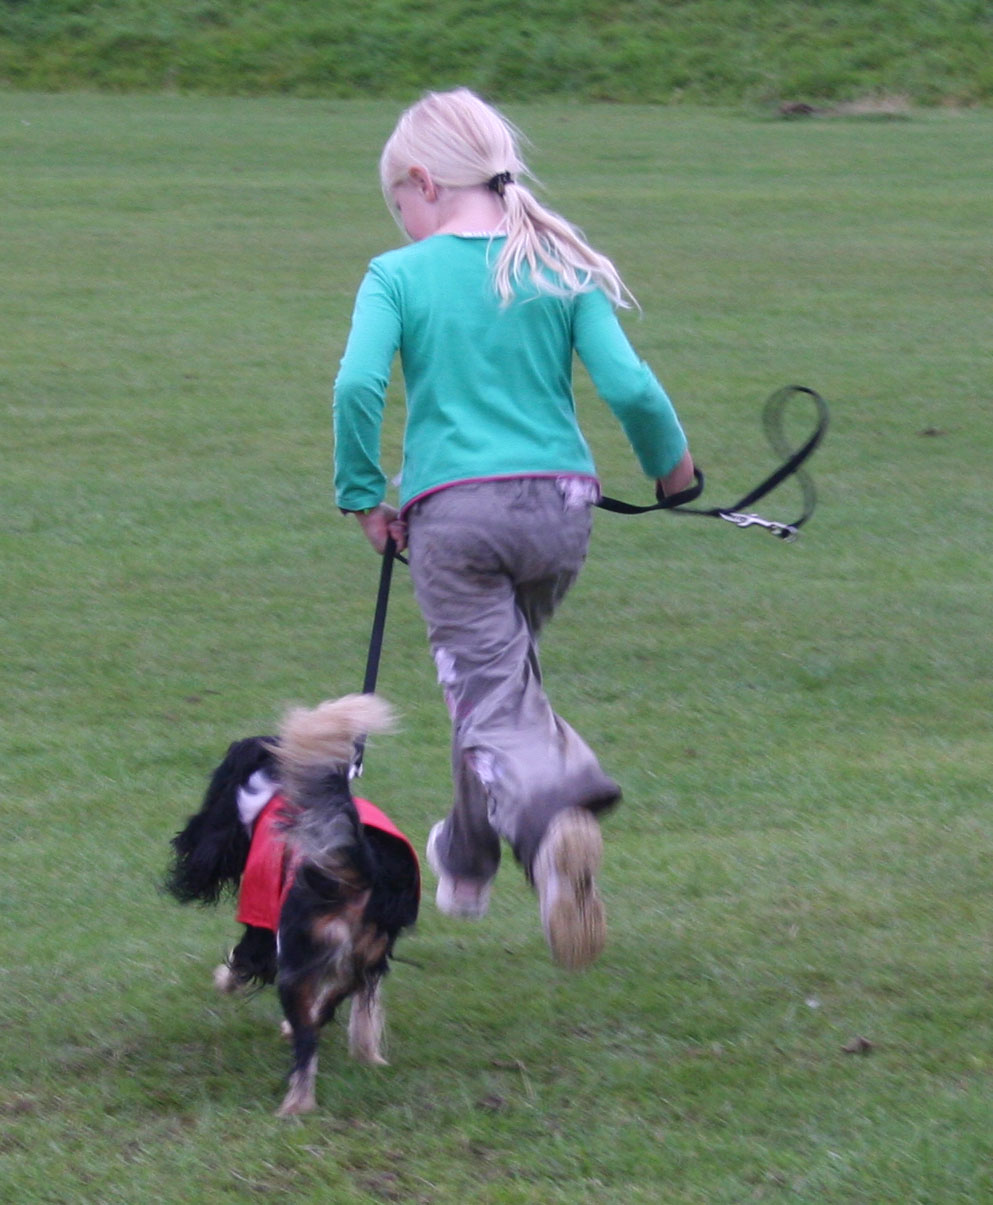 Dog & Child running